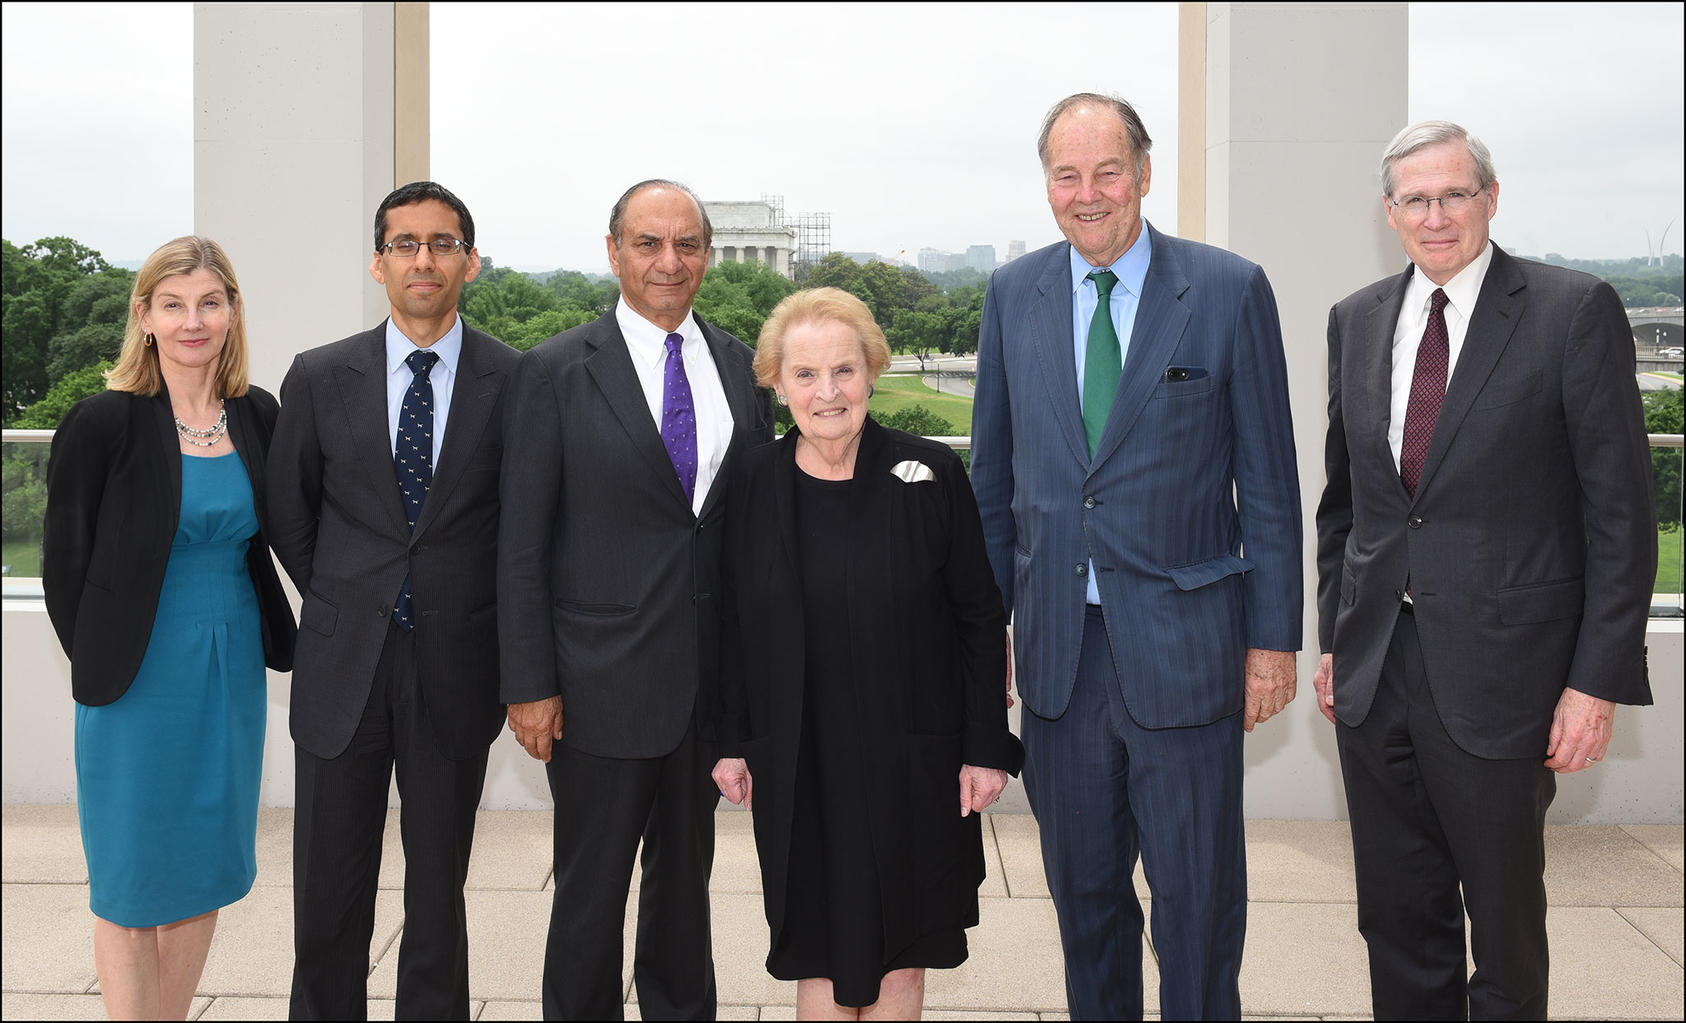 Pictured left to right, Nancy Lindborg, Michael Singh, Farooq Kathwari, Madeleine Albright, Governor Thomas Kean, Stephen Hadley